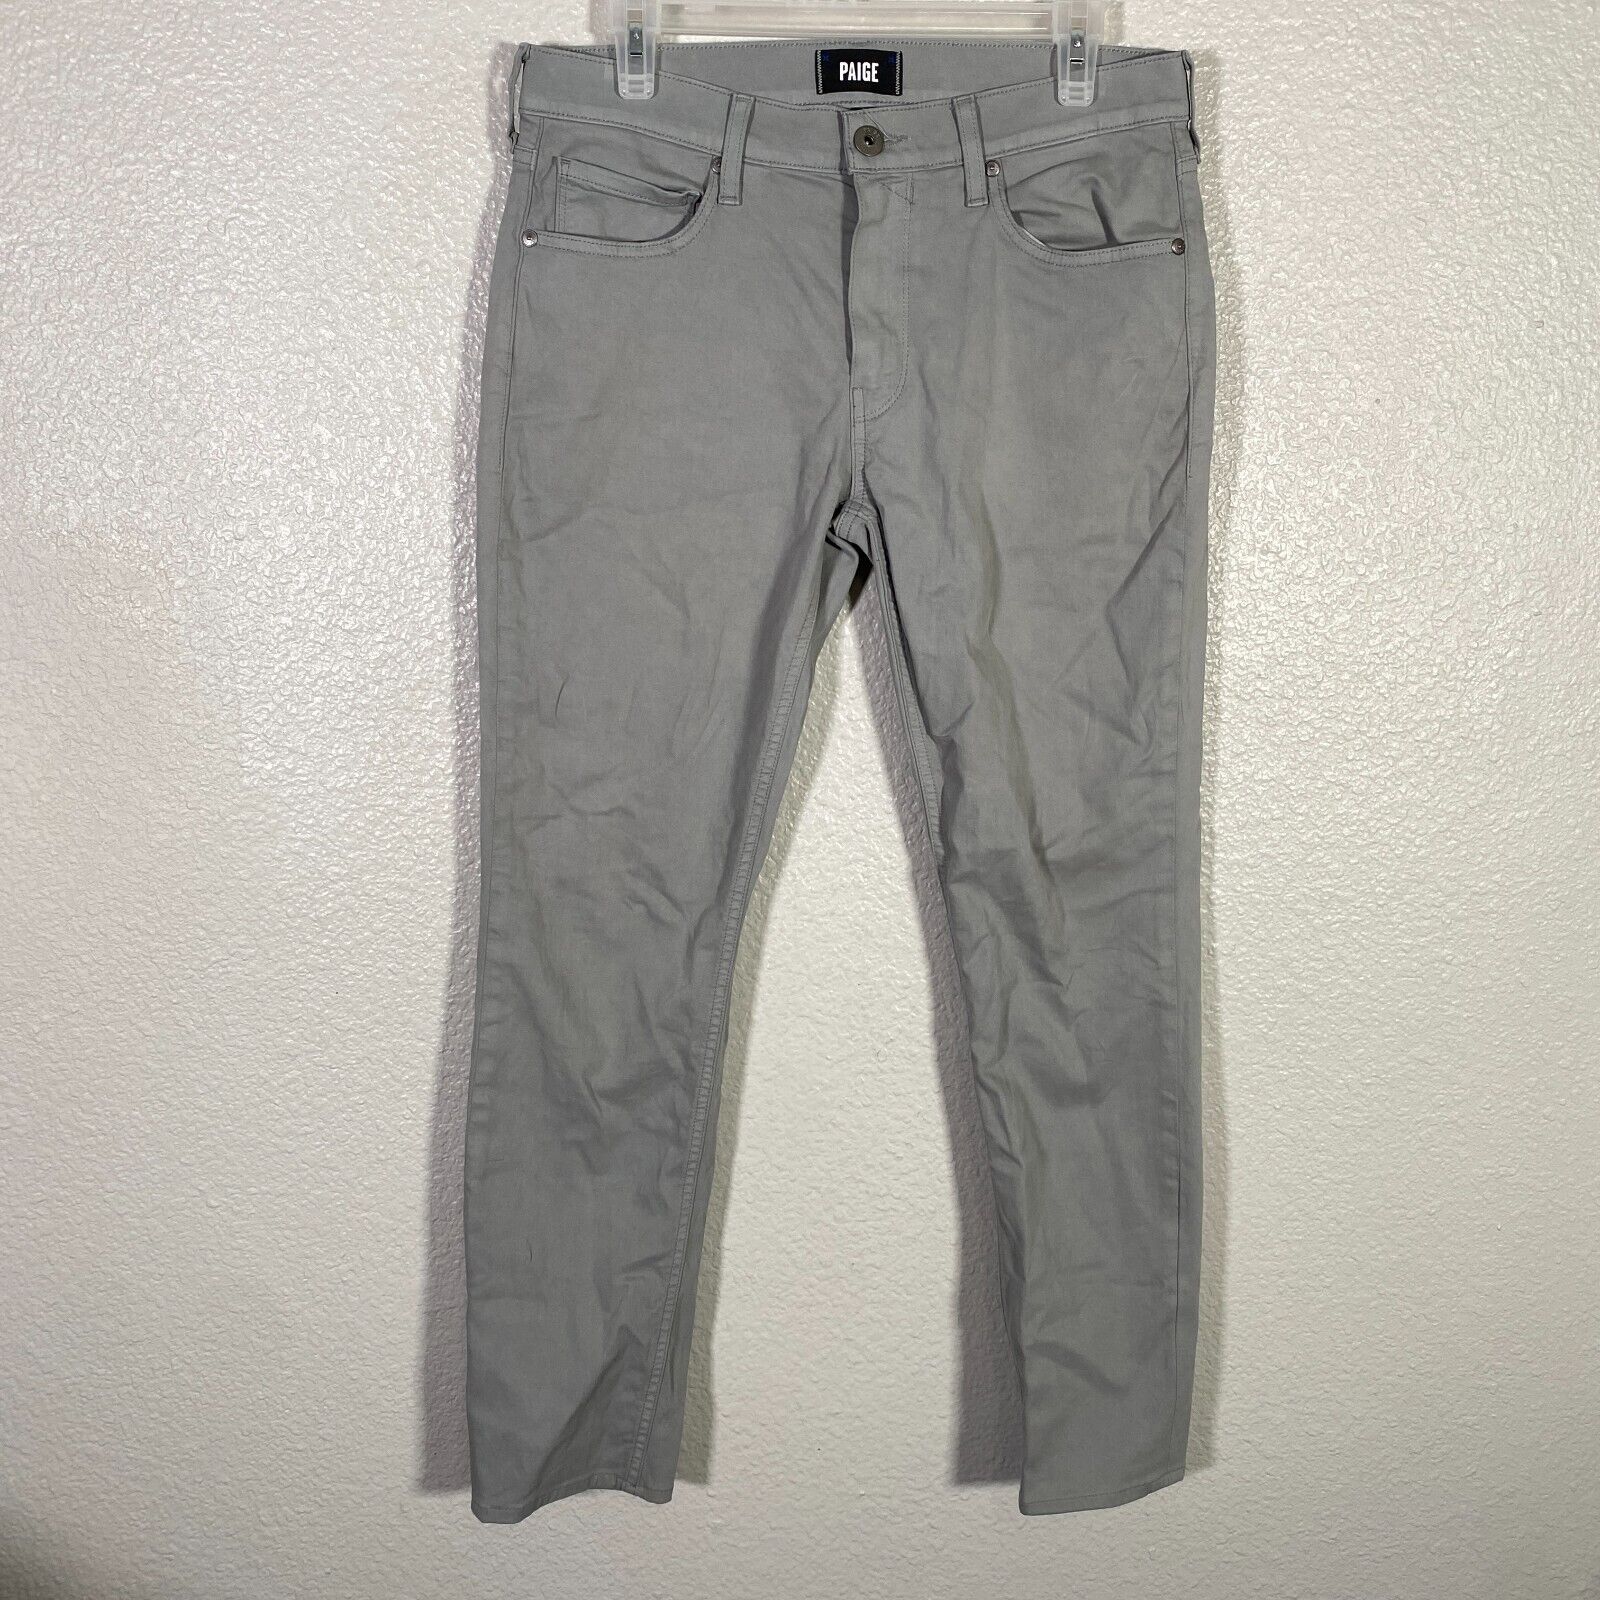 Paige Jeans Mens 31x32 Gray Lennox Slim Straight Pants 5 Pocket Stretch Casual